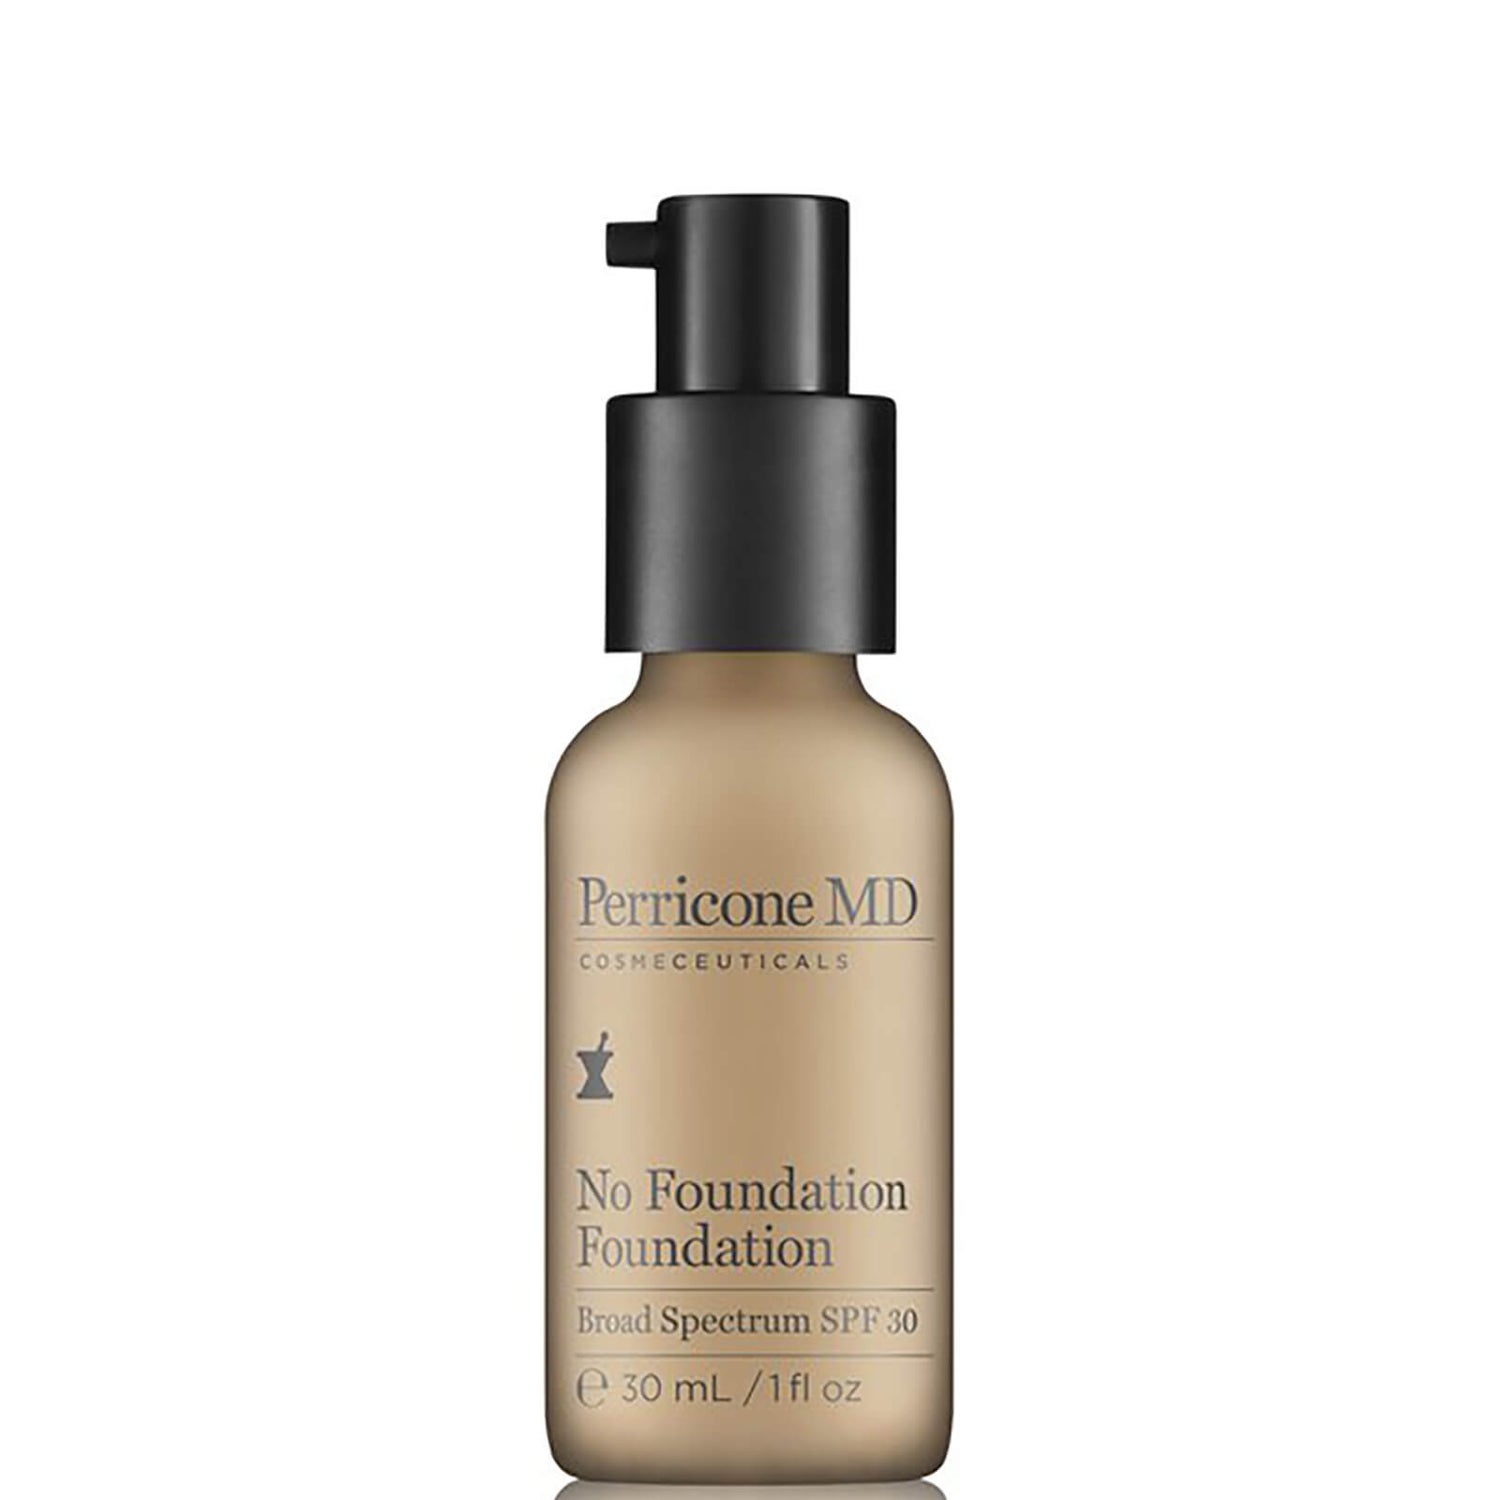 Perricone MD "No Foundation" No.1 fond de teint - peau claire (30ml)